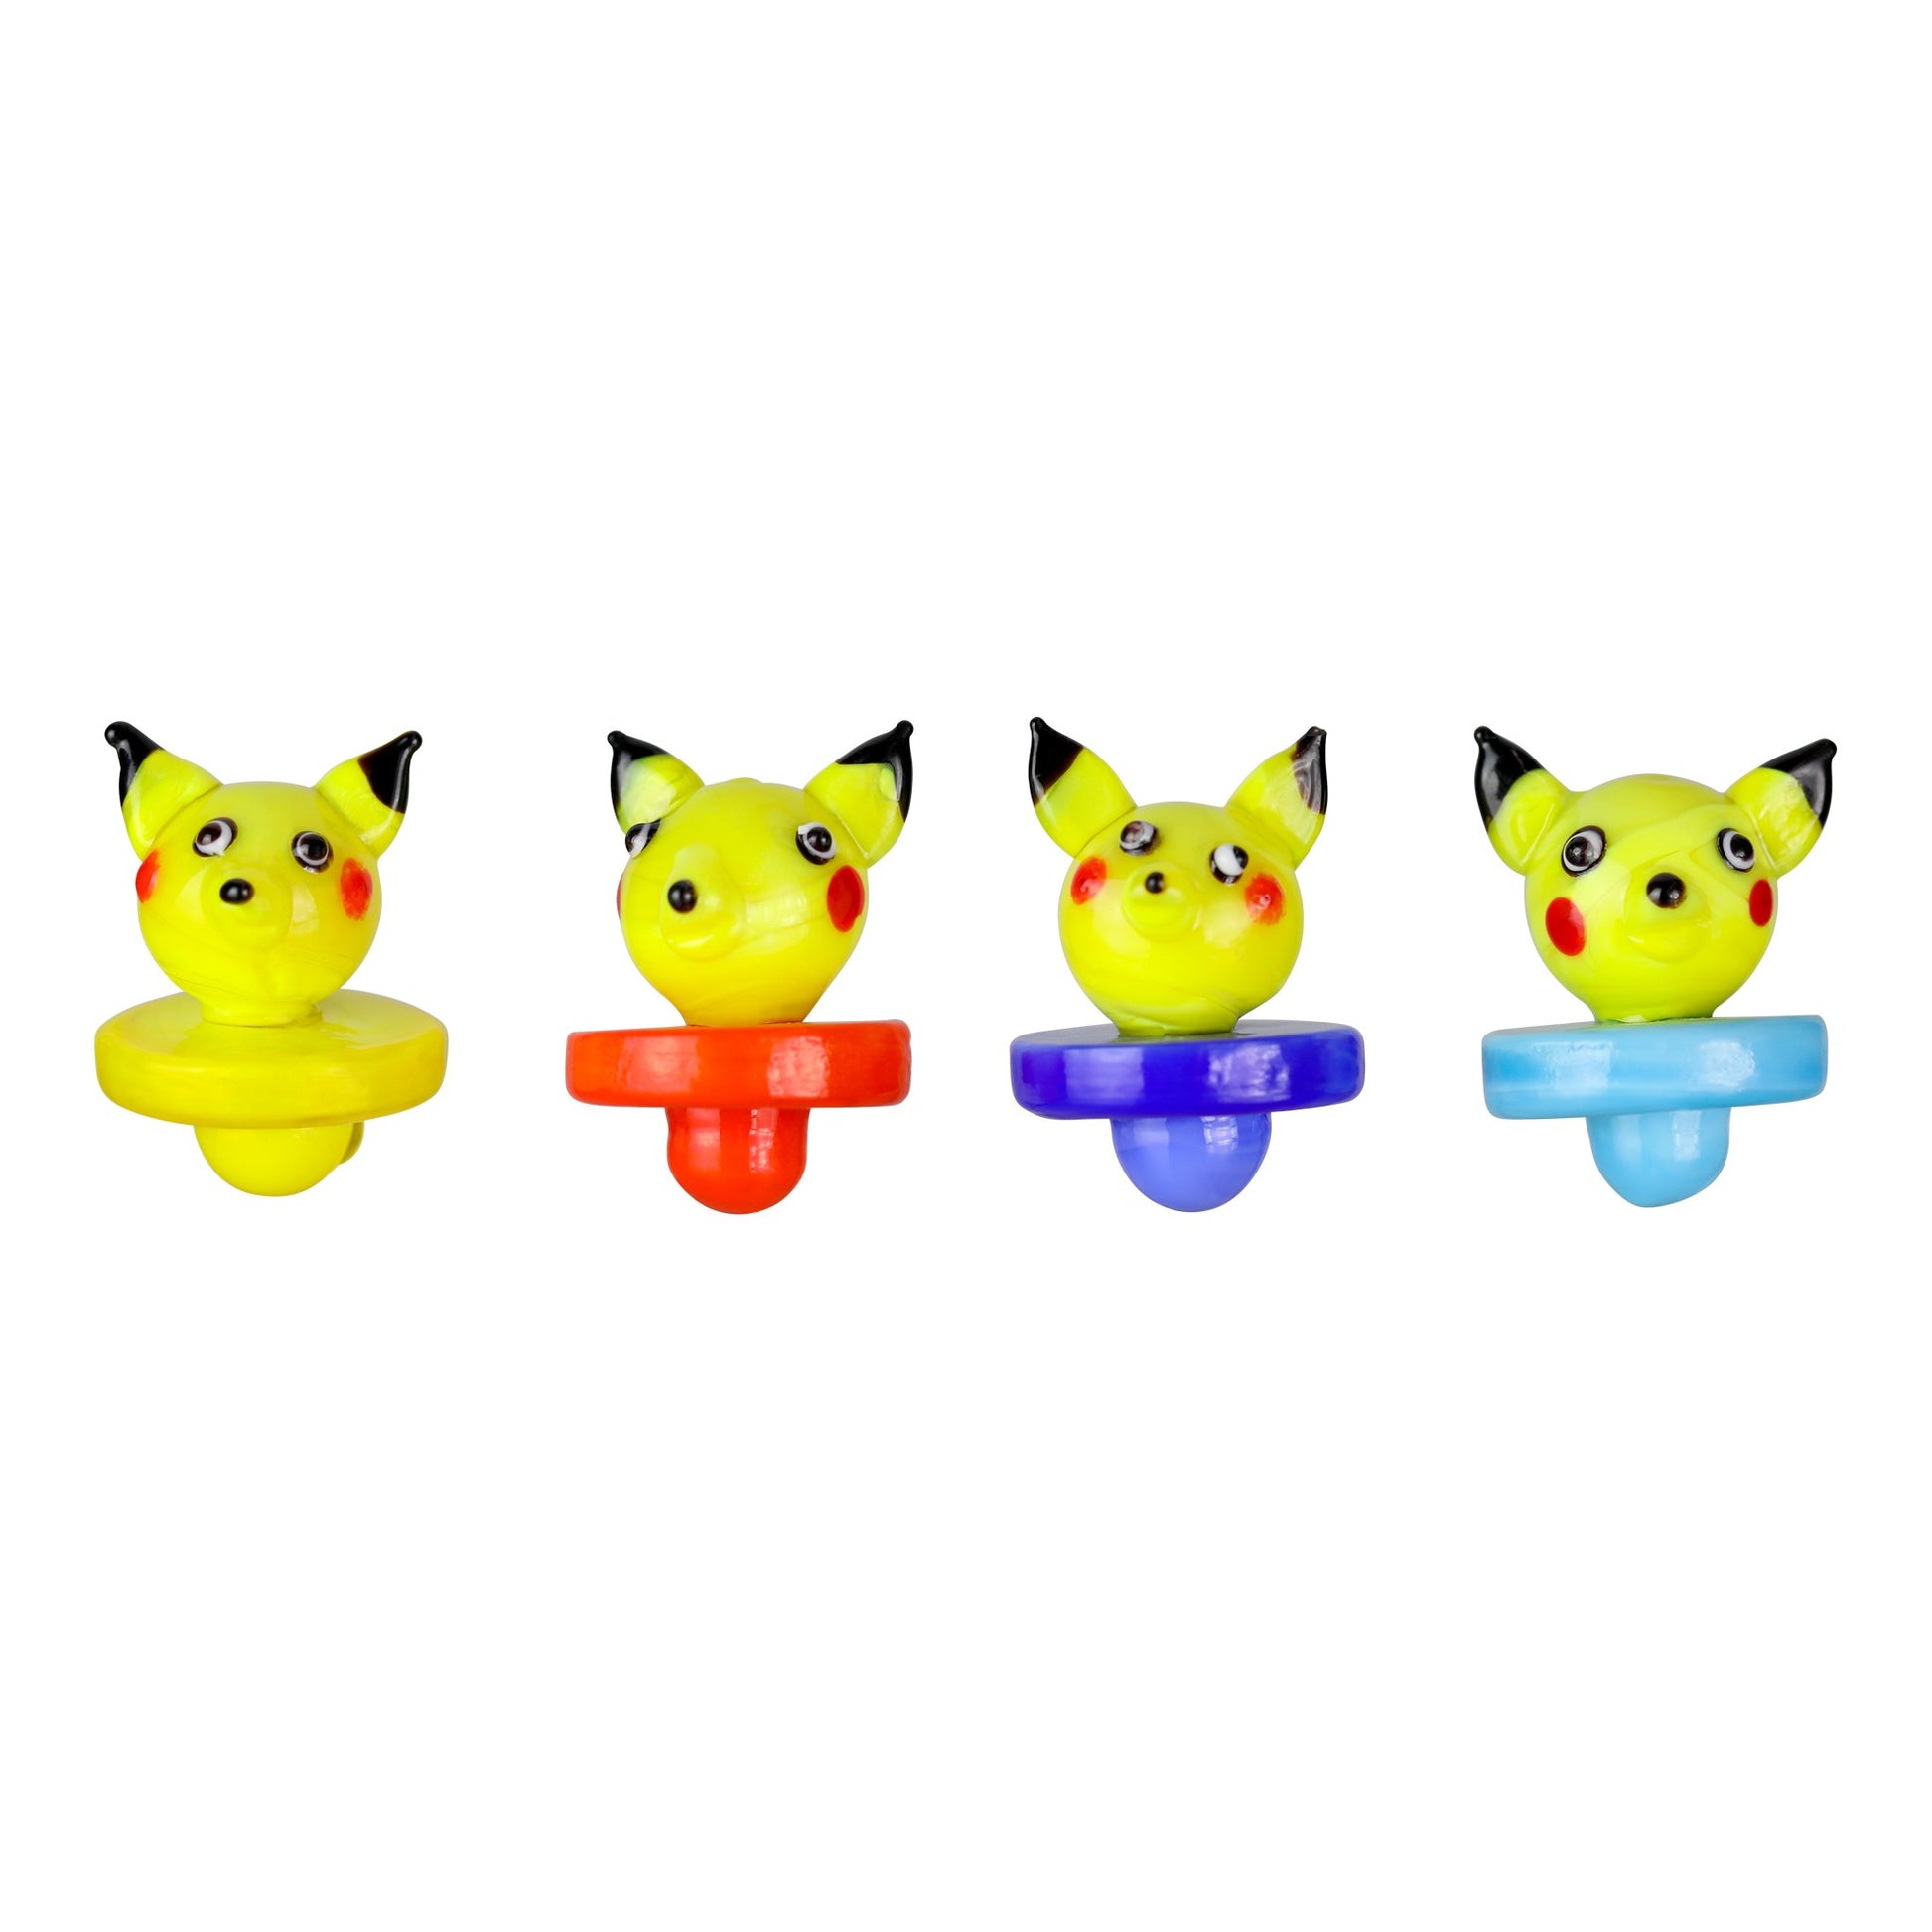 Disoriented Pikachu Carb Cap